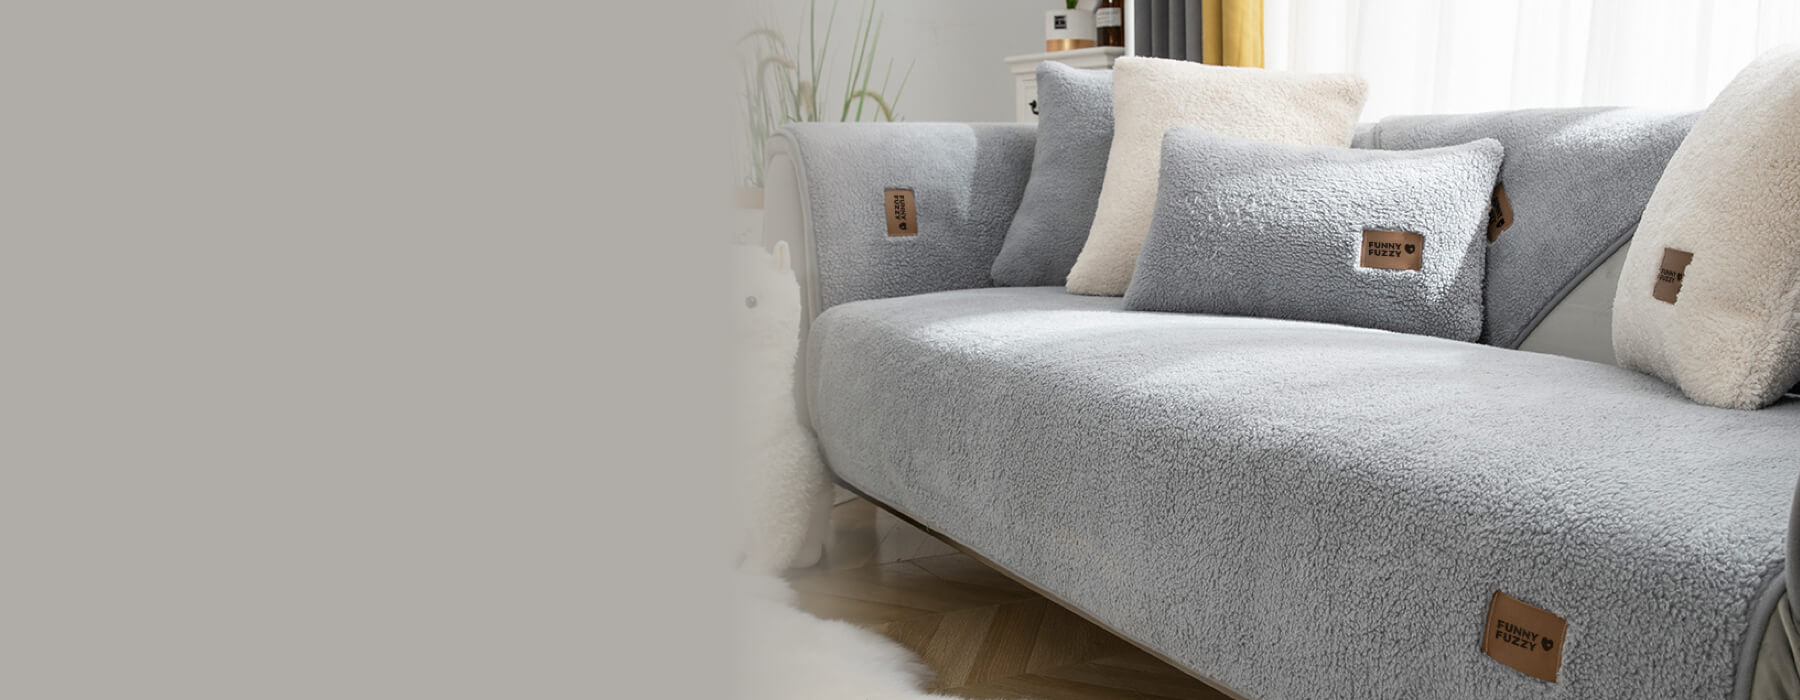 Flower Shape Sofa Cushions Pillow Room Decor - FunnyFuzzy